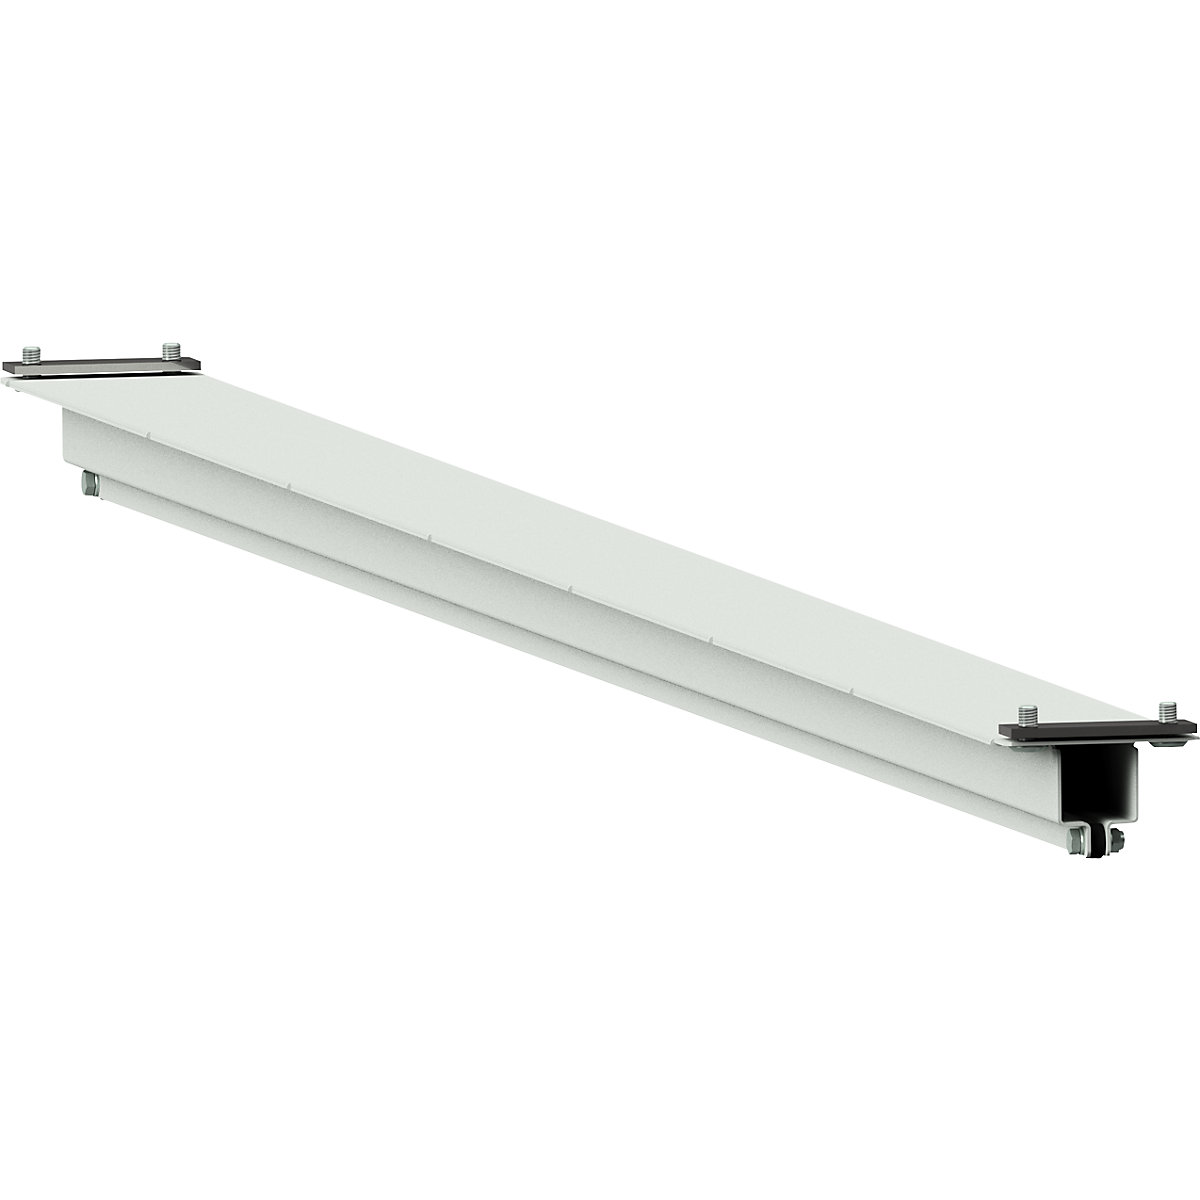 Suspension rail for modular system – ANKE, light grey, for bench width 2000 mm